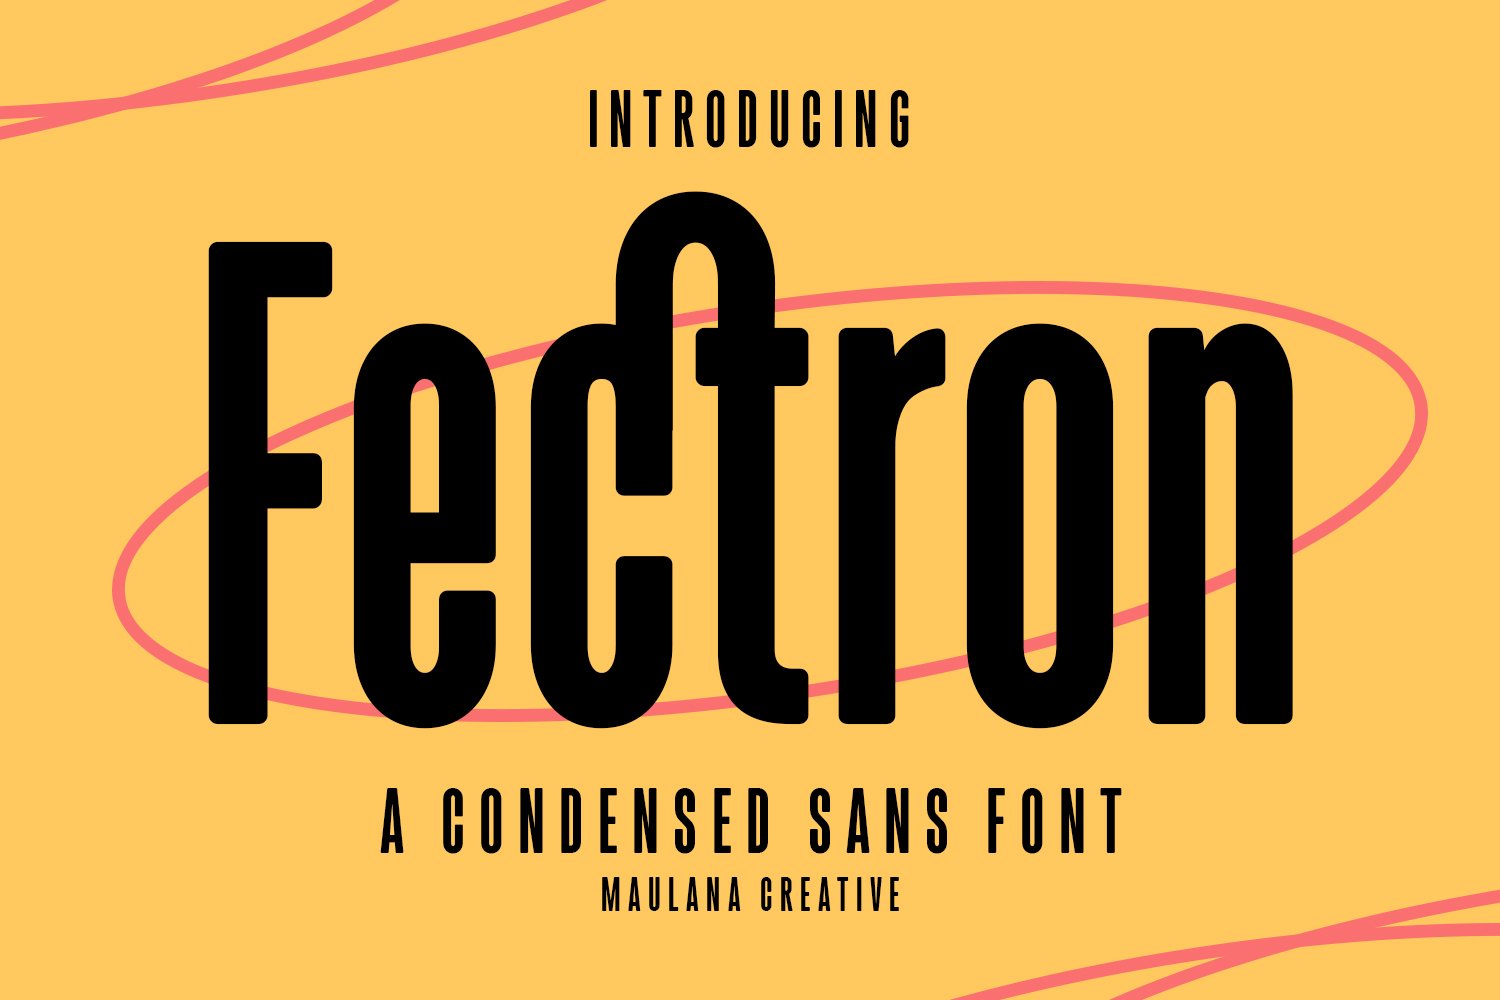 Fectron Condensed Sans Font cover image.